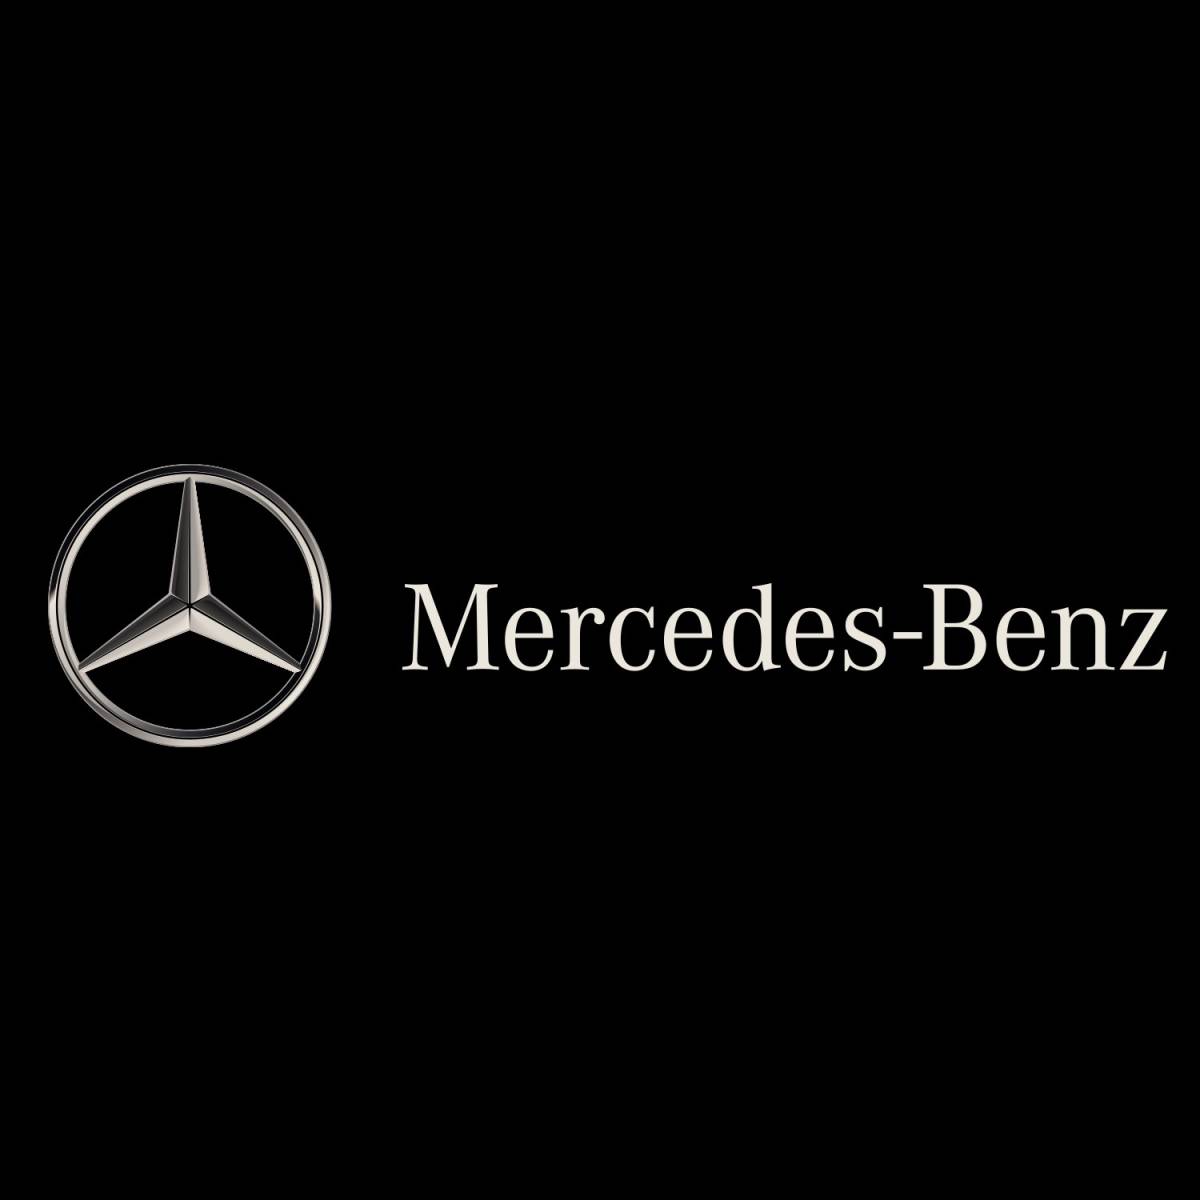 AMG Mercedes Benz Mercedes-Benz в машине чистка soft щетка покрытие с футляром .g